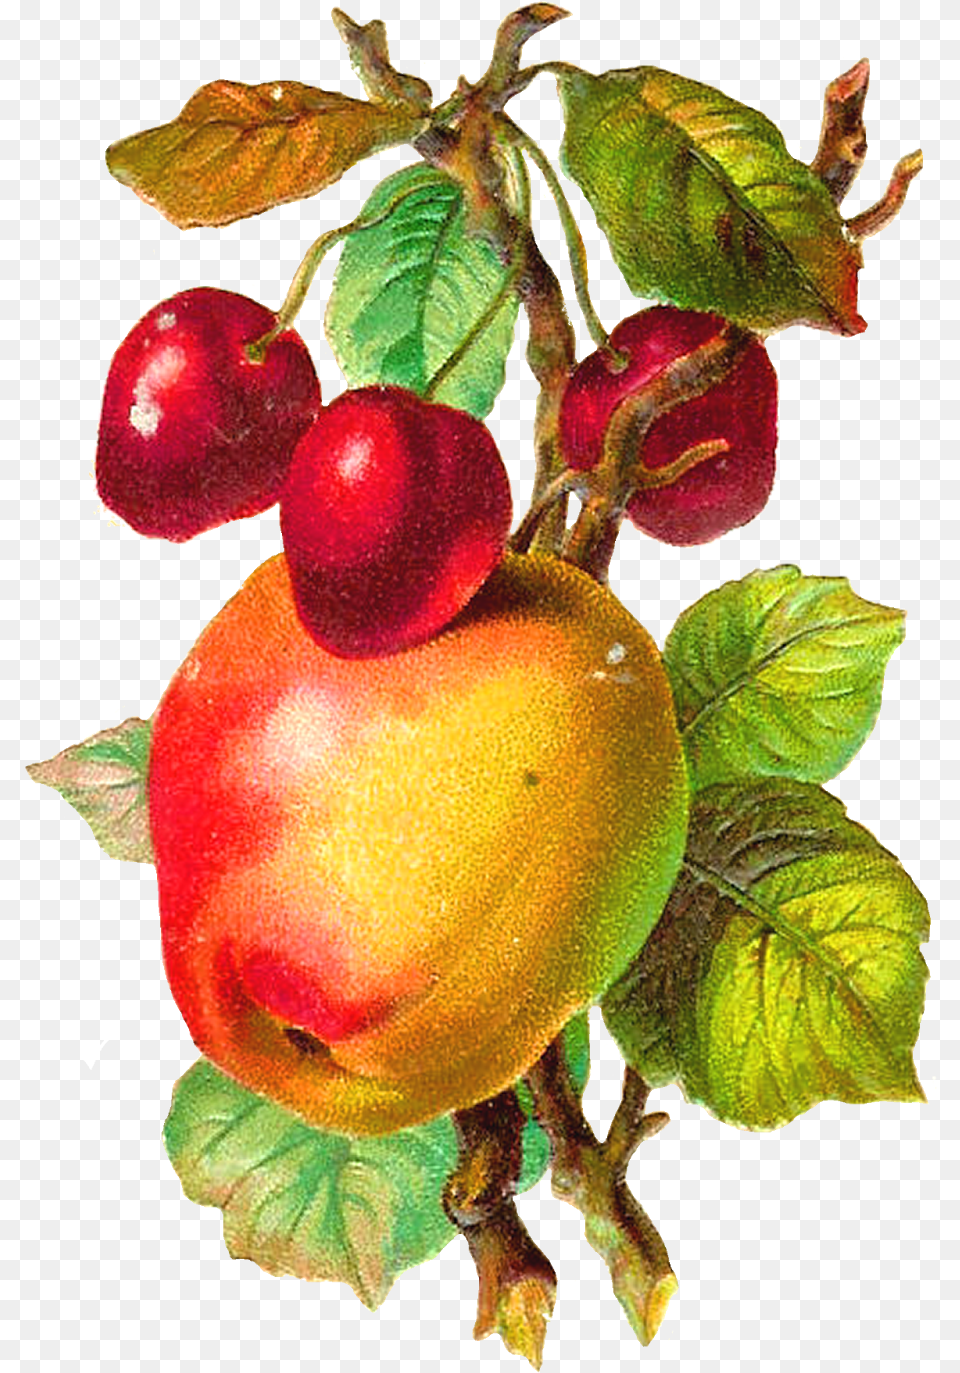 Download Hd Antique Apple Clipart Vintage Apple, Food, Fruit, Plant, Produce Png Image